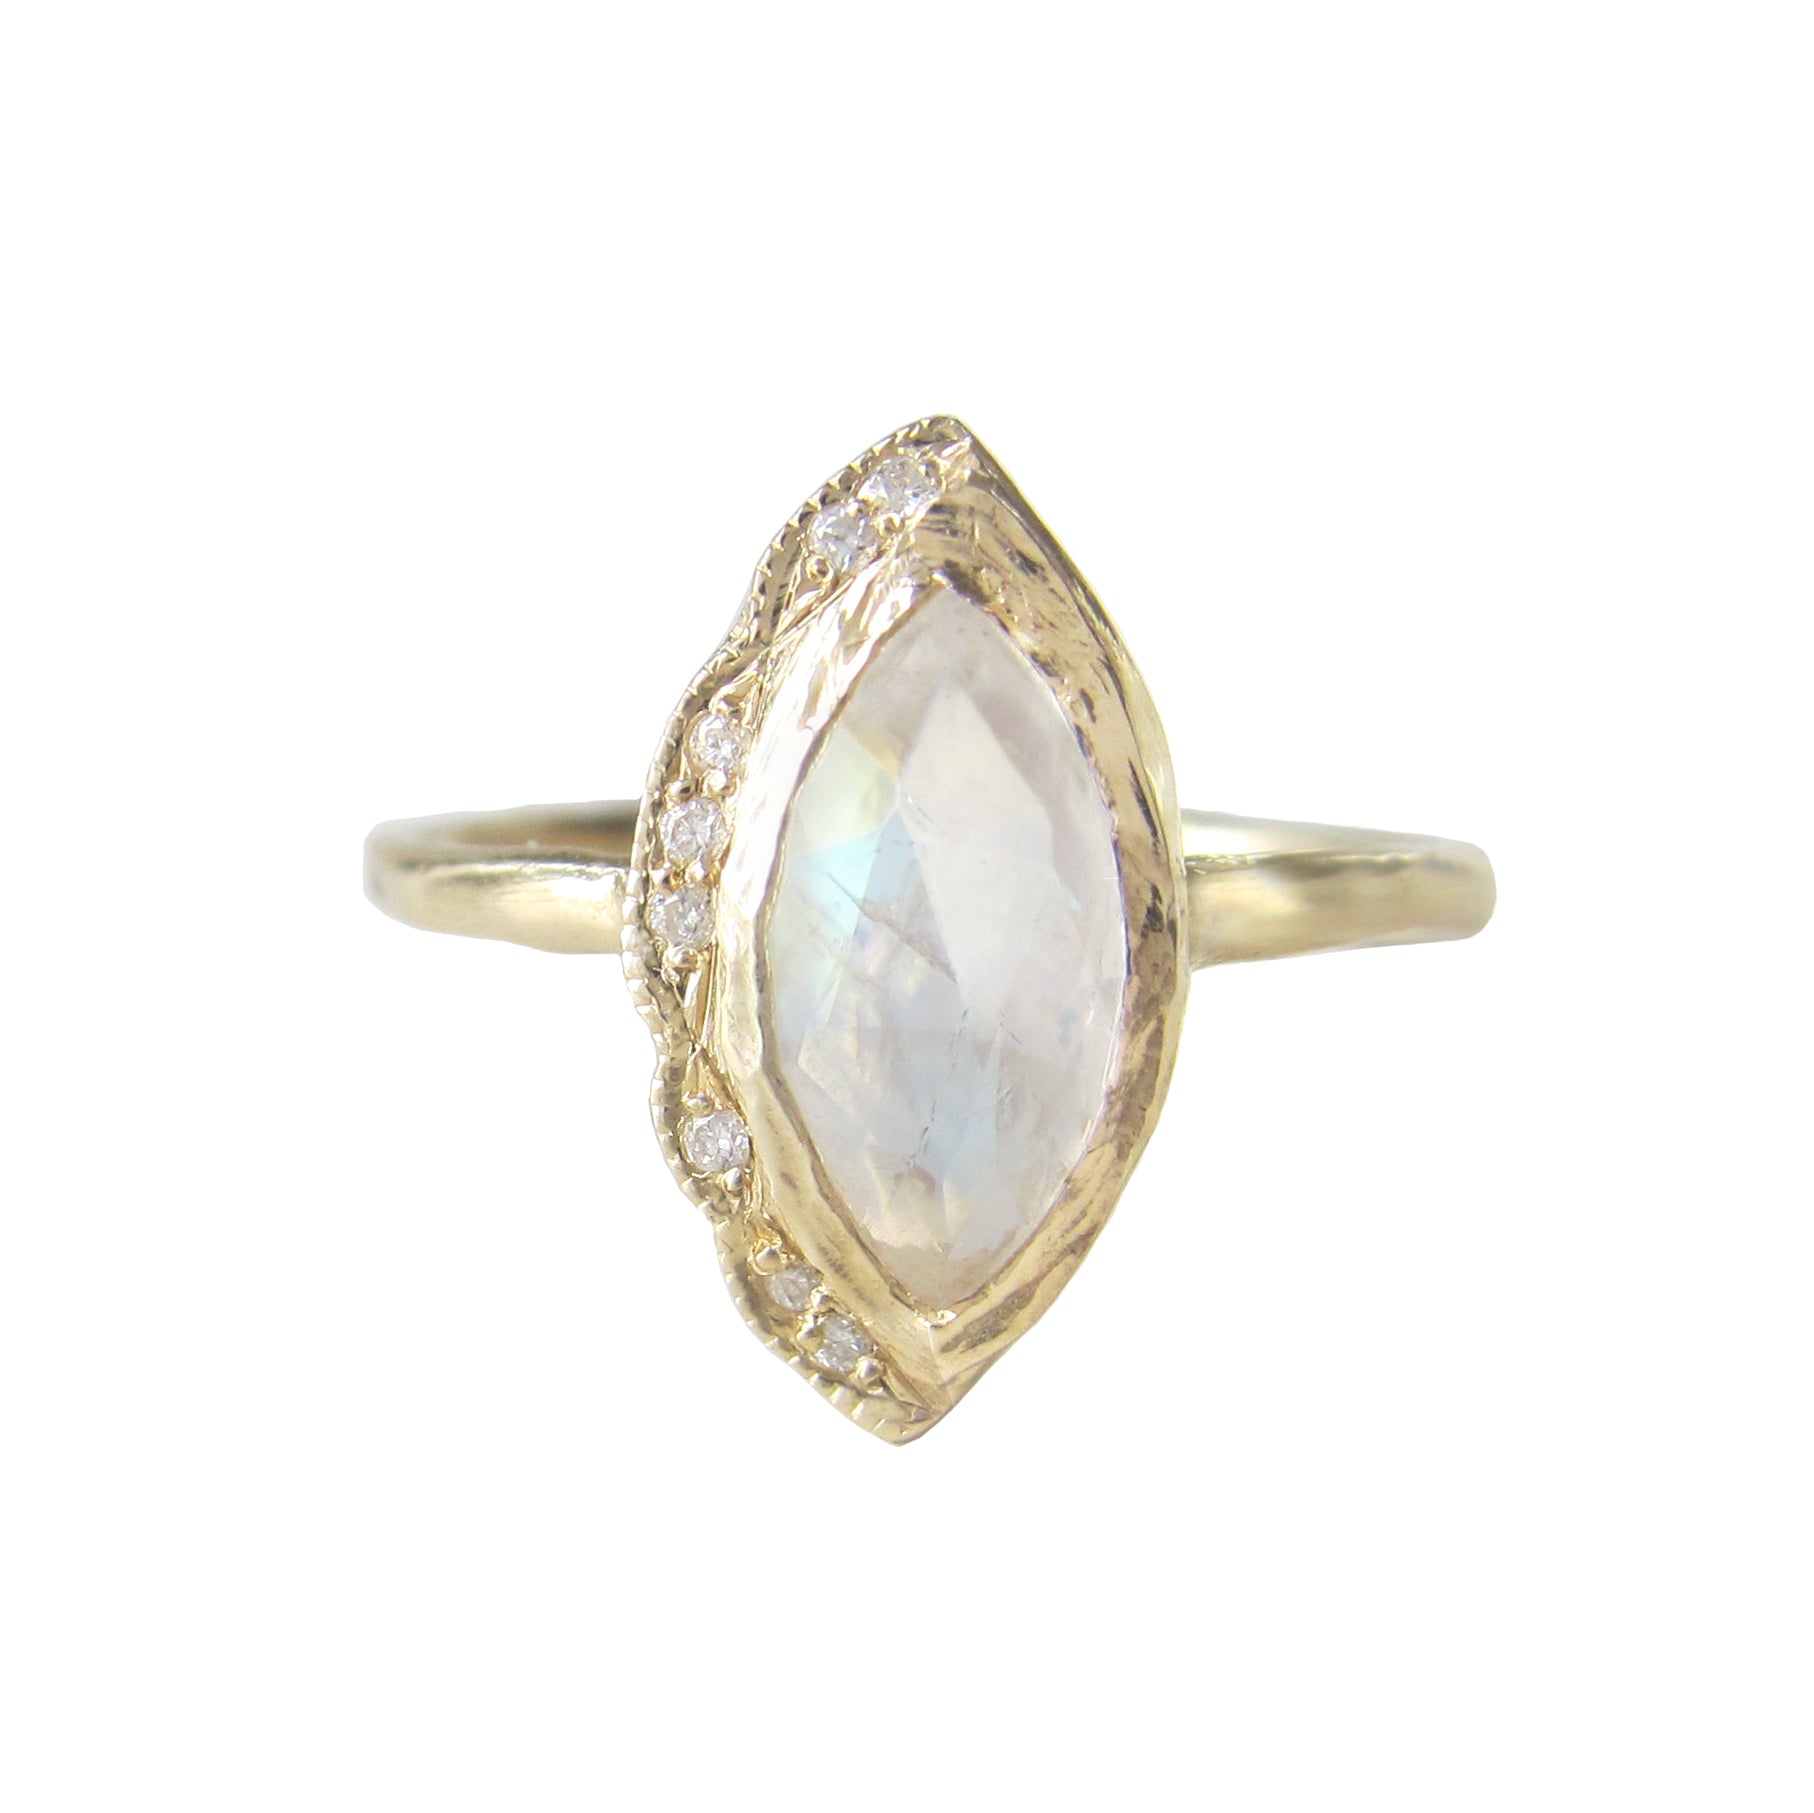 Misa Jewelry - Moonstone Jewelry - Native Moonstone Ring